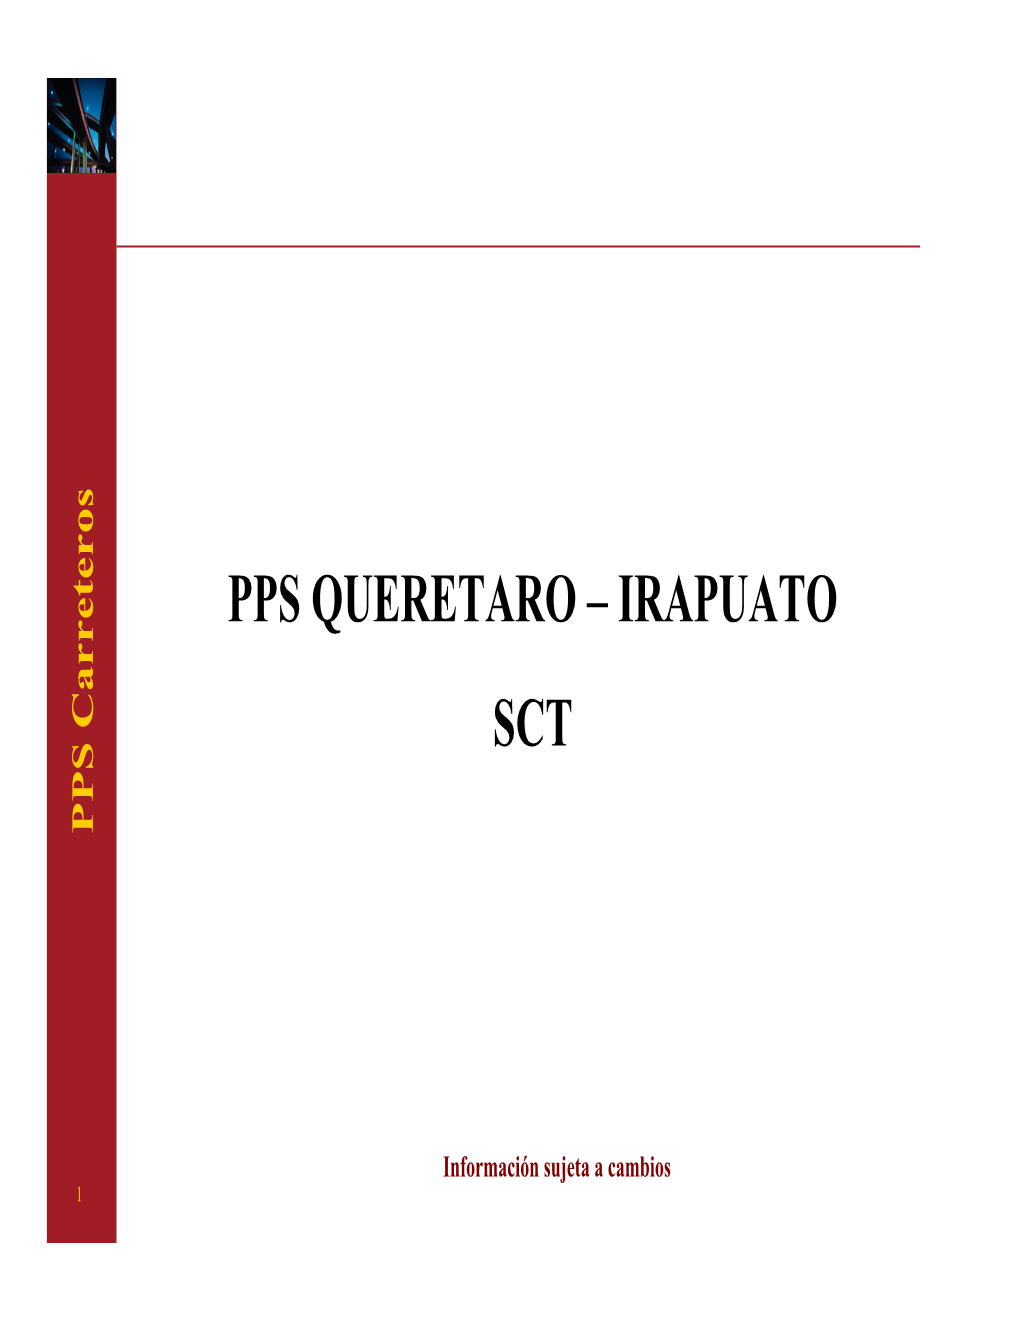 Pps Queretaro – Irapuato